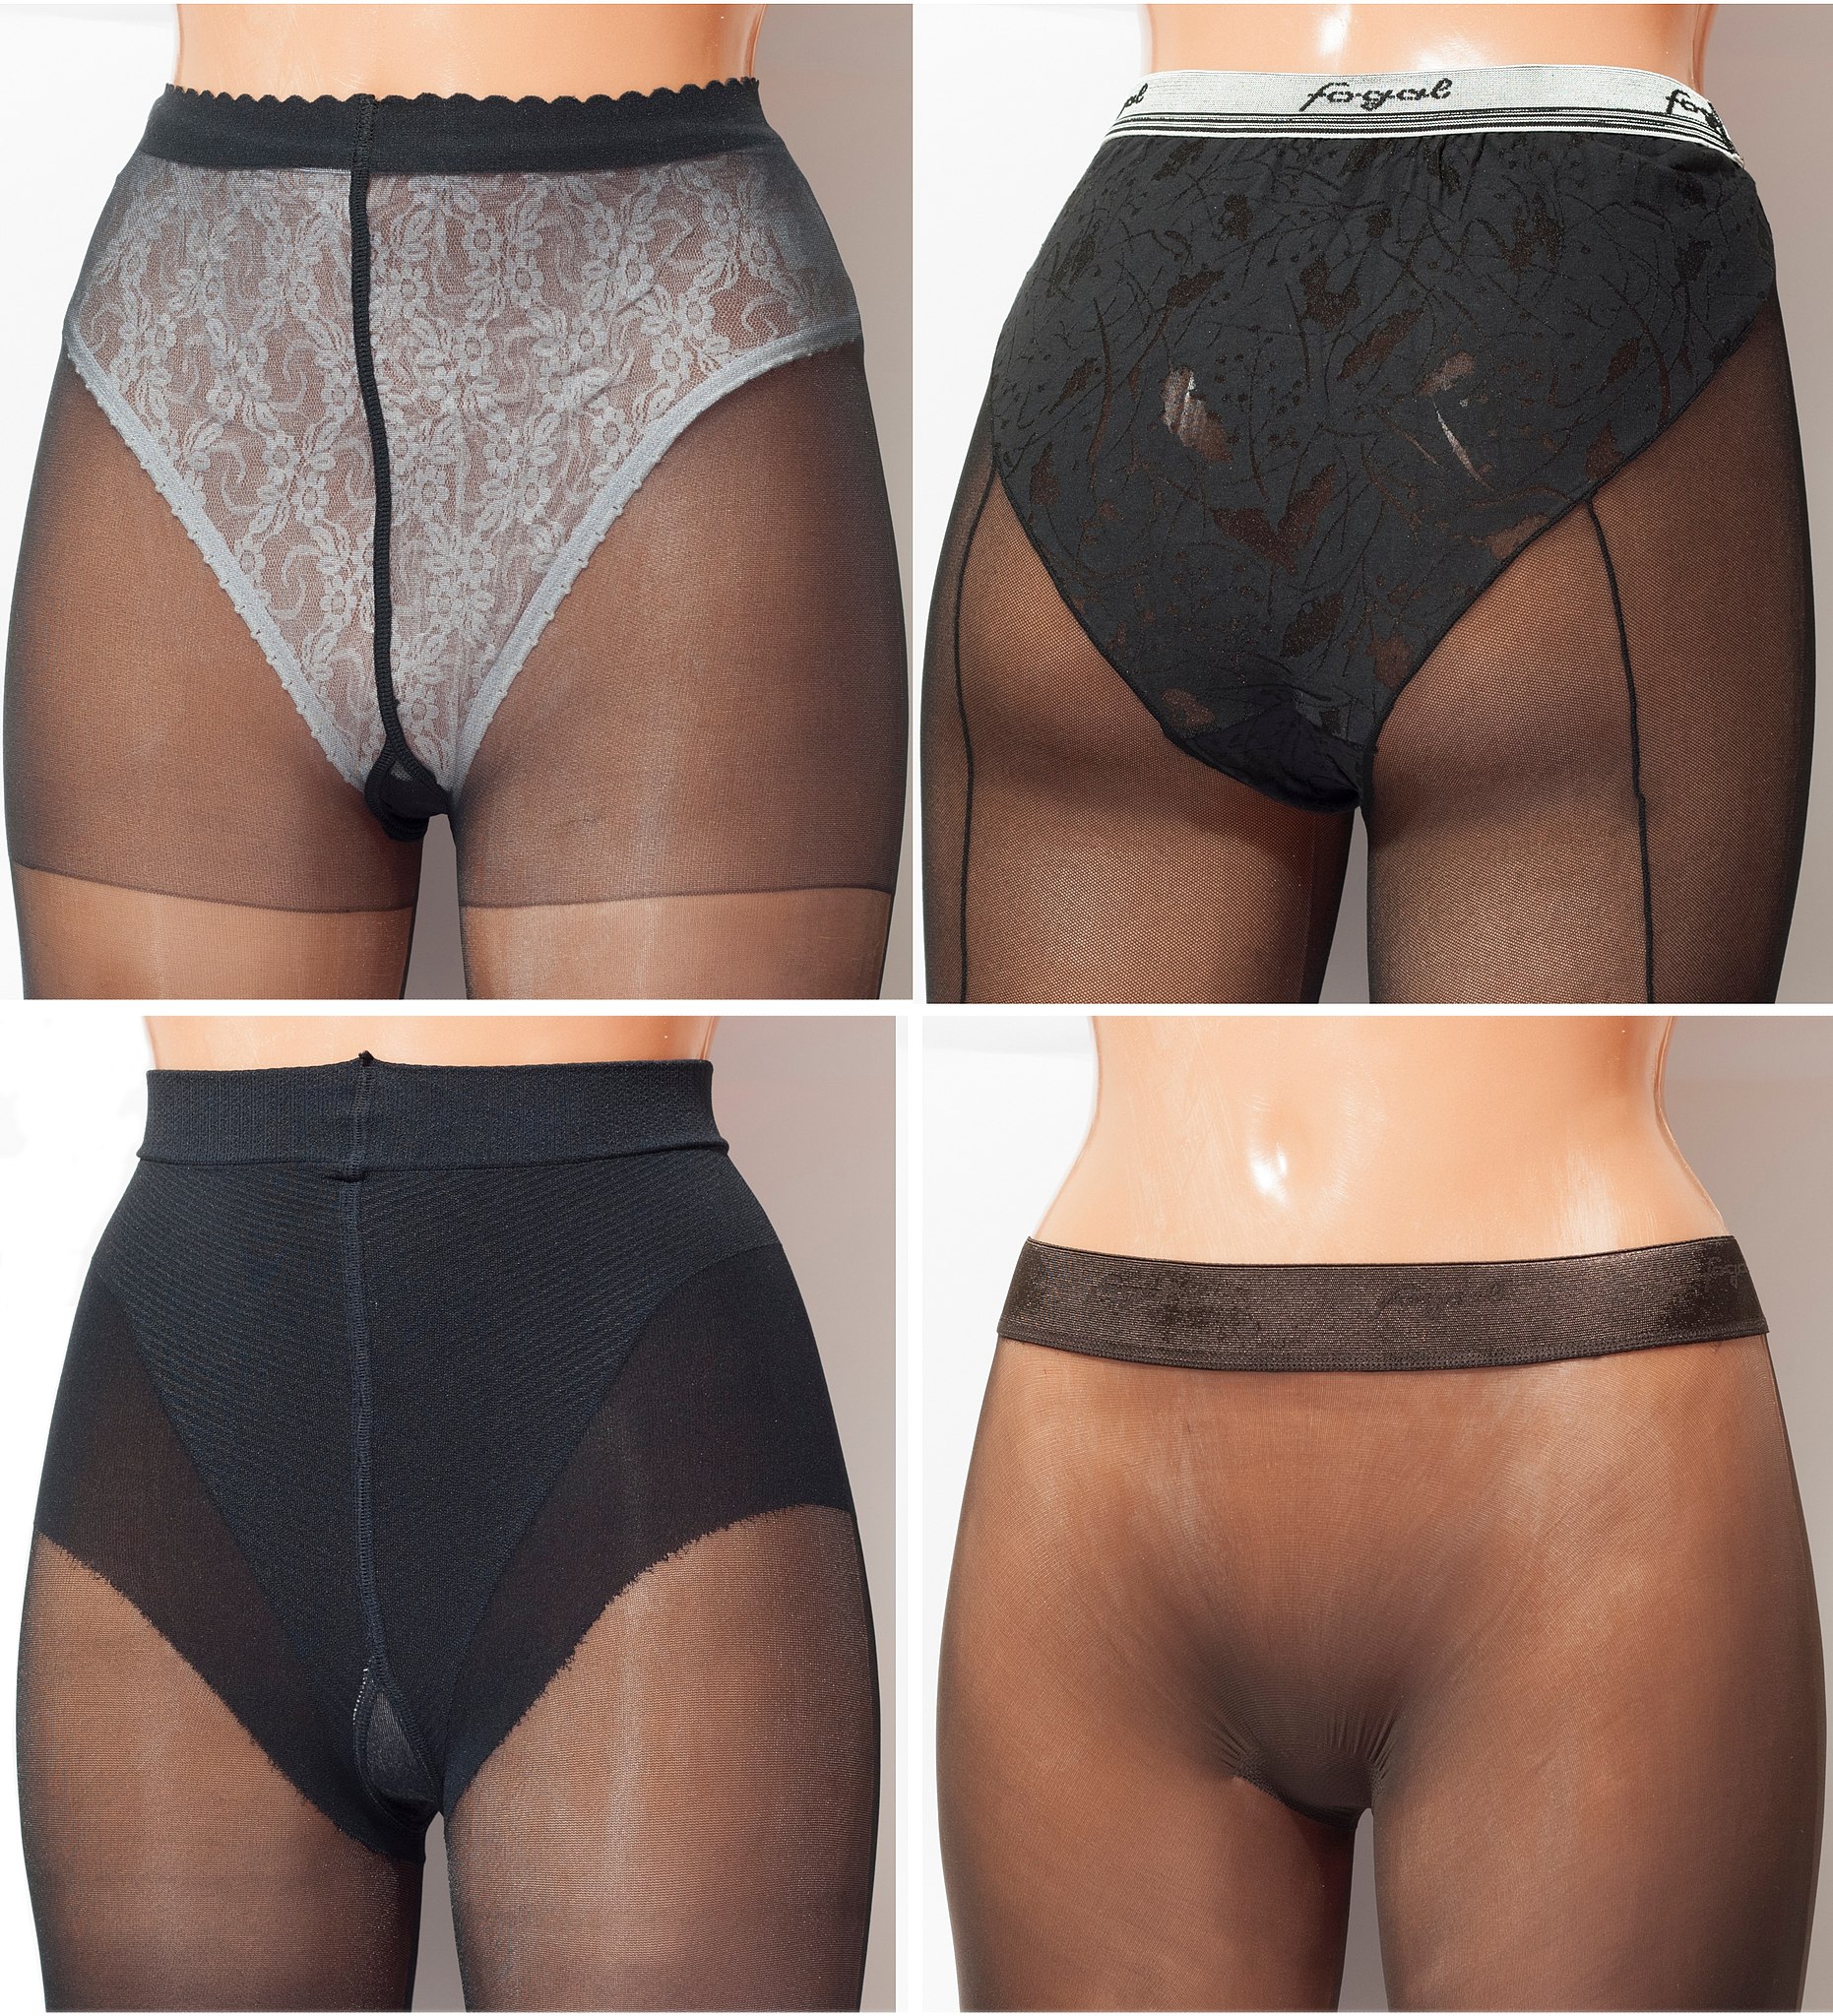 chiara ignacio recommends Panties Under Pantyhose Pics